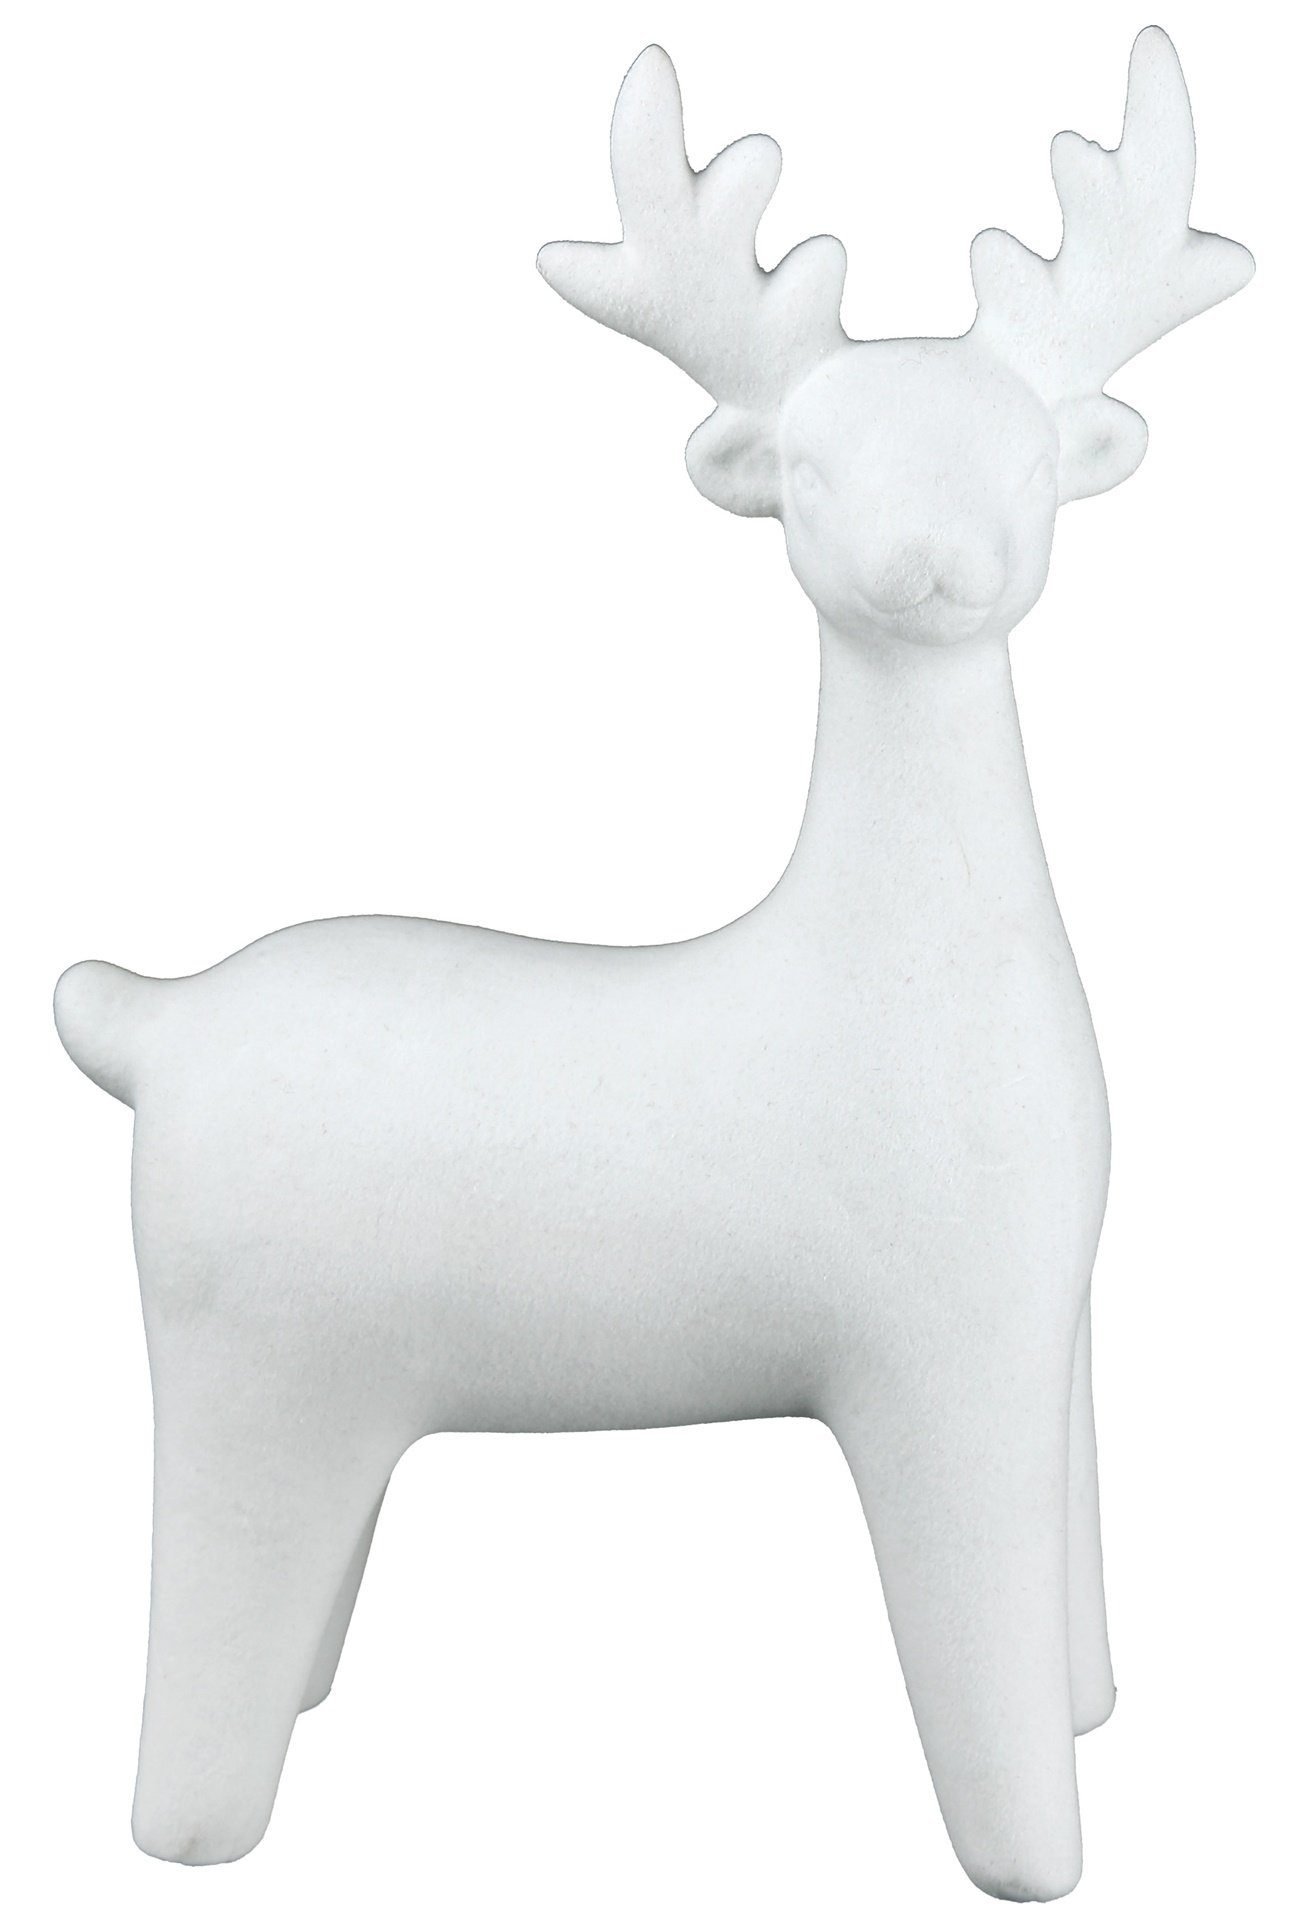 dekojohnson Dekofigur Deko-Hirsch Rentierdeko Weihnachtsdeko 16 cm weiß | Dekofiguren